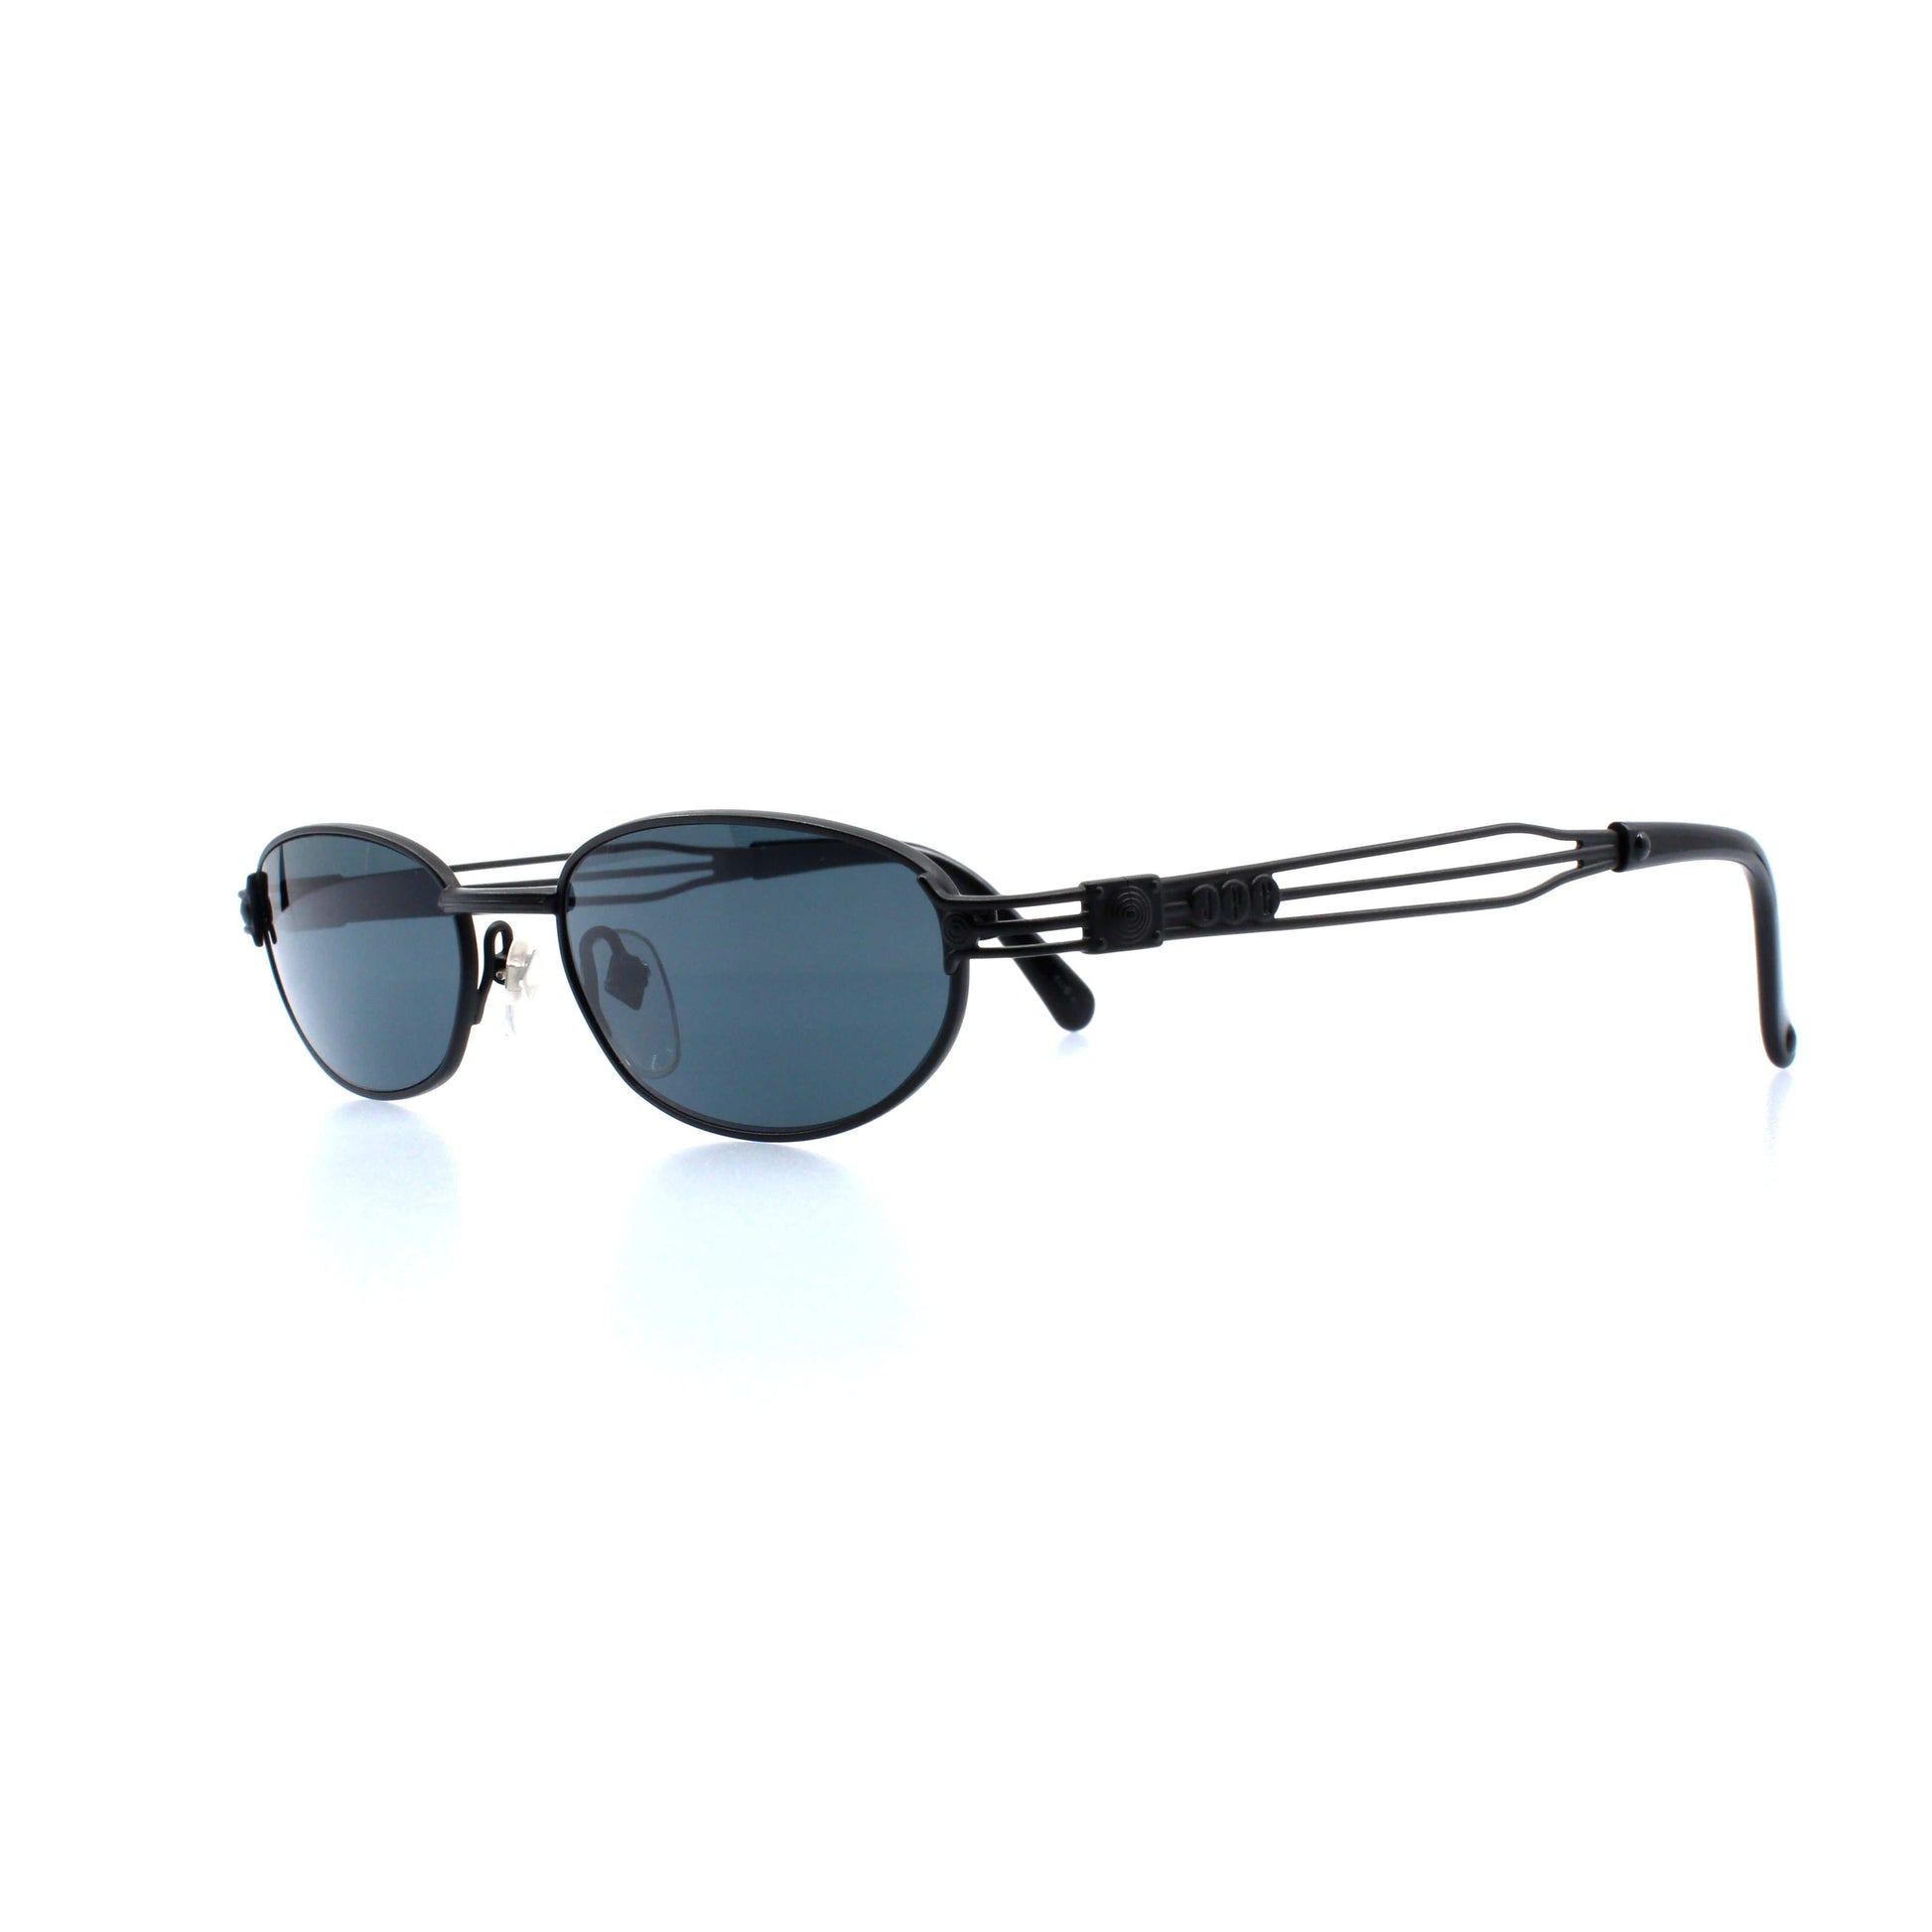 Black Vintage Jean Paul Gaultier 58-0001 Sunglasses RSTKD Vintage